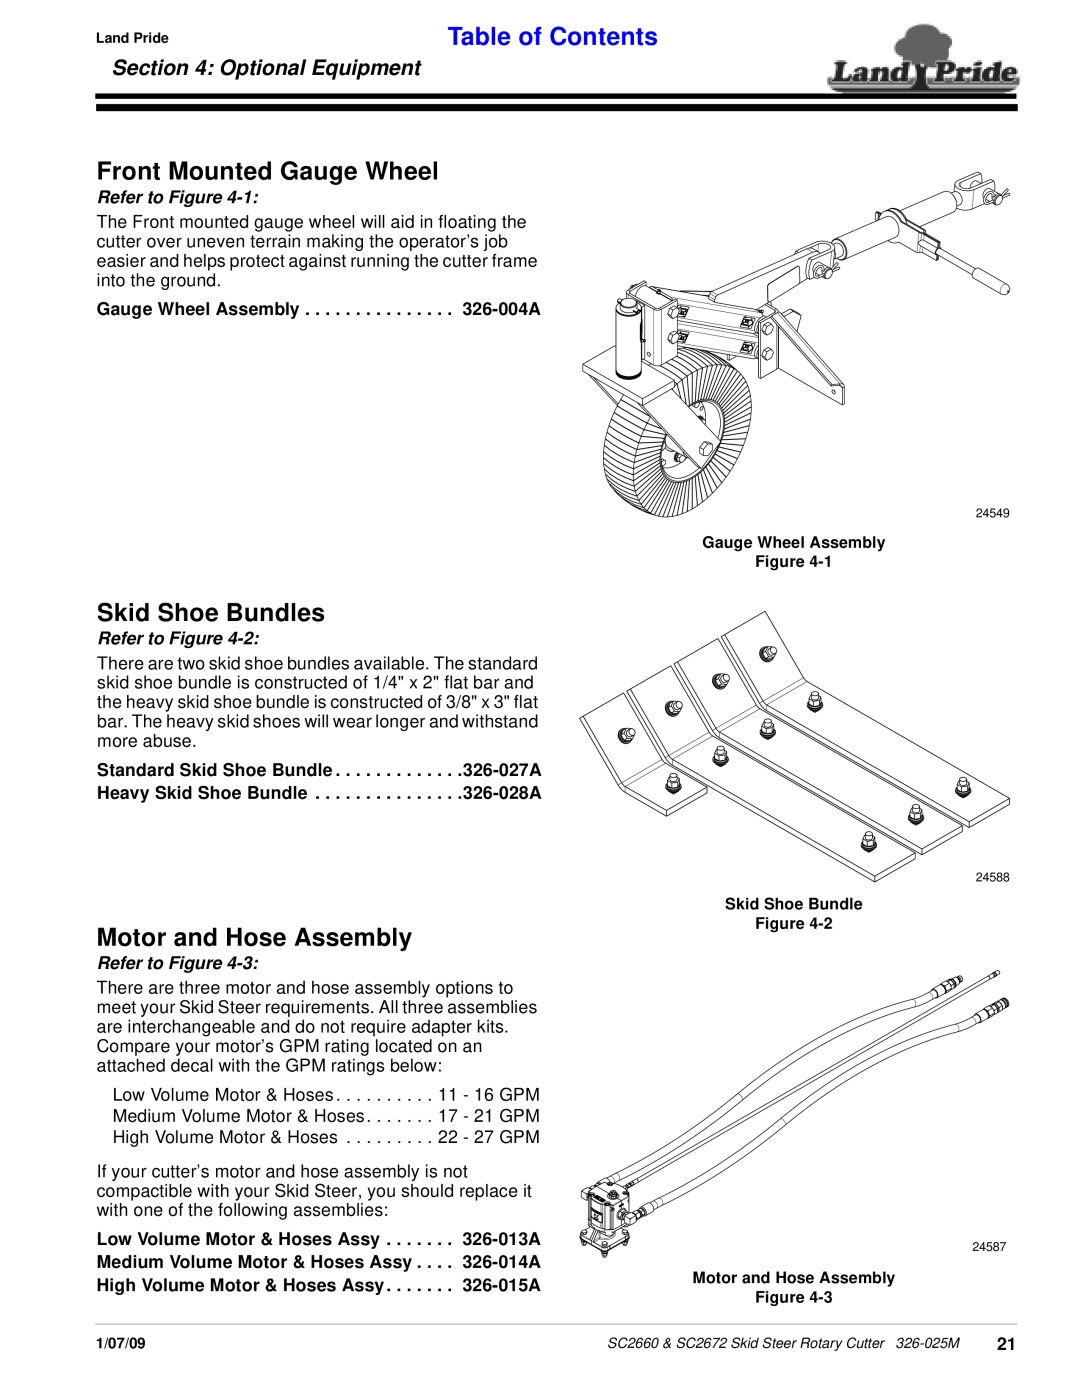 Land Pride SC2672, SC2660 manual Front Mounted Gauge Wheel, Skid Shoe Bundles, Motor and Hose Assembly, Optional Equipment 